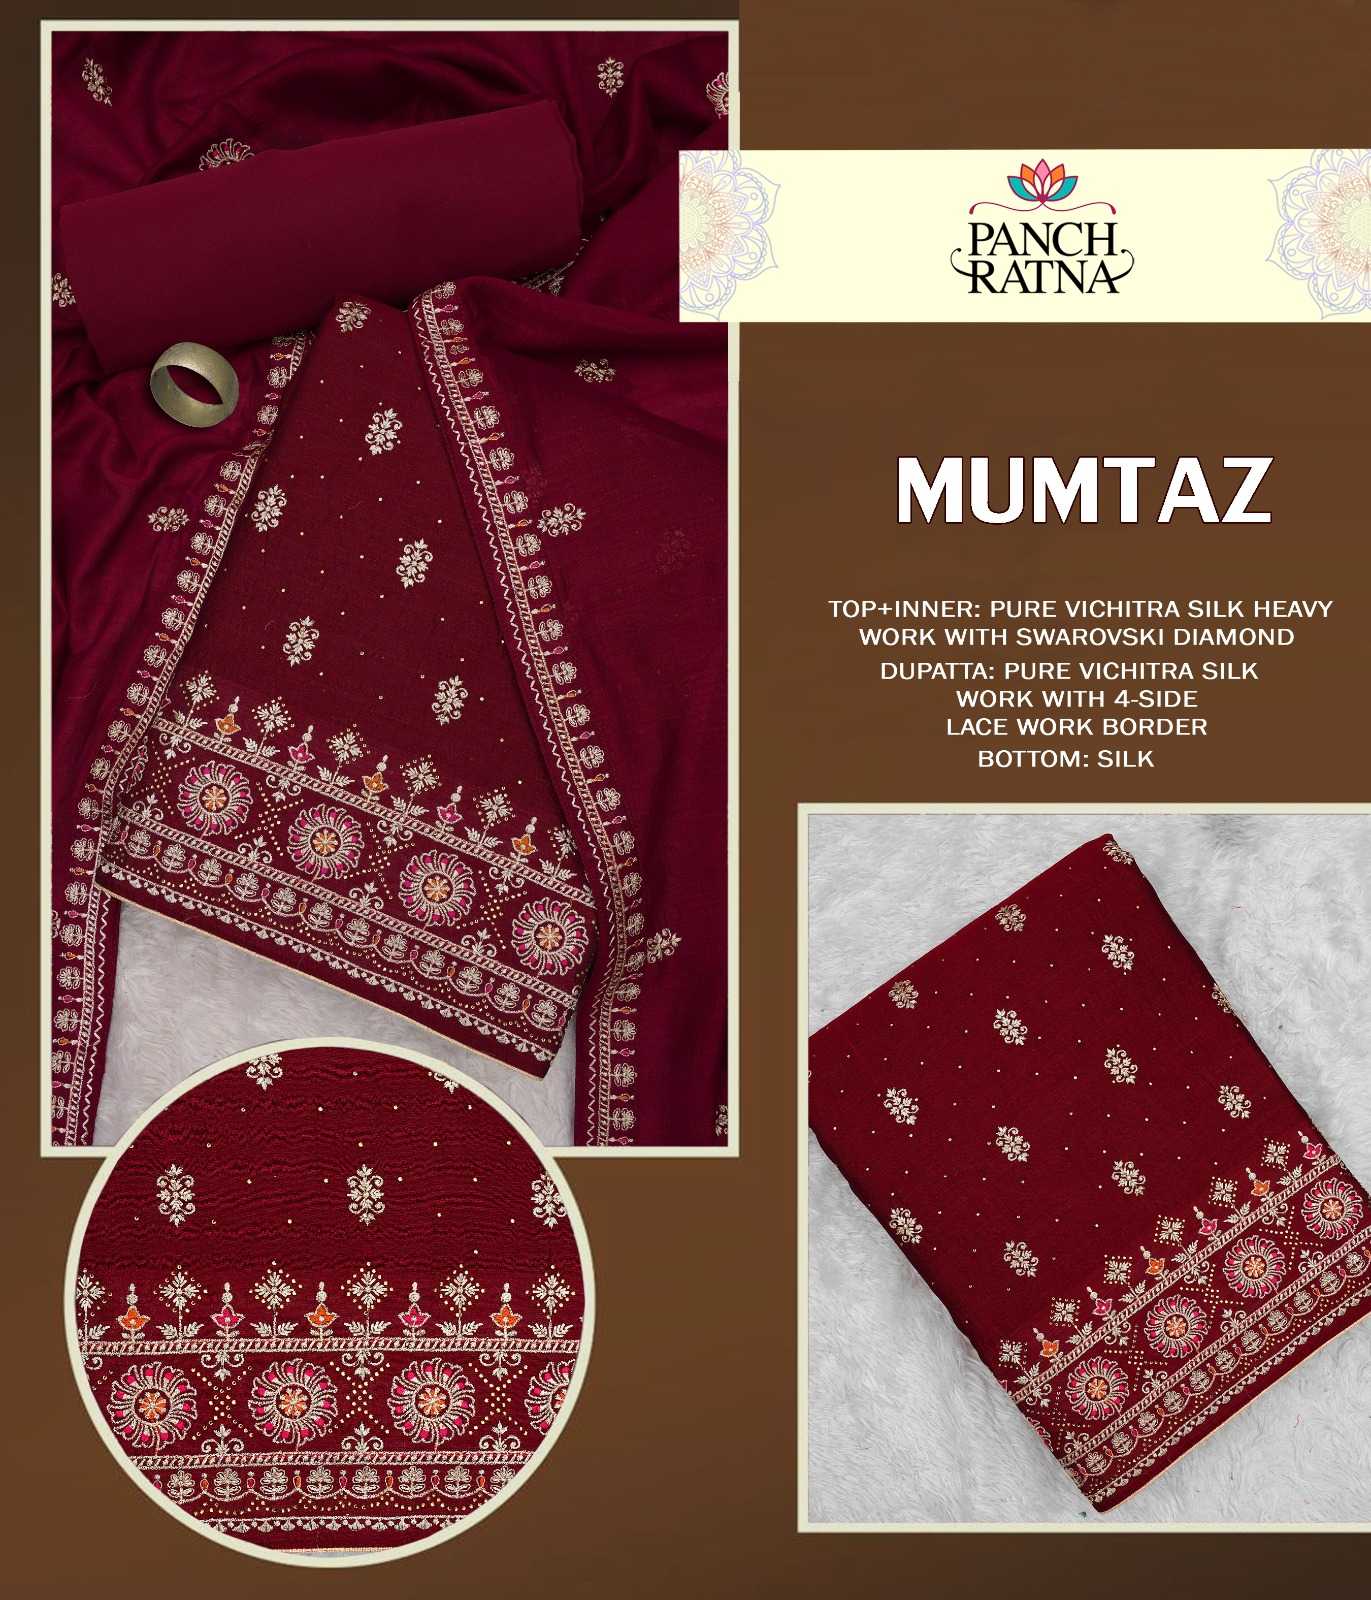 panch ratna mumtaz designer swarovski work occasion wear dress material